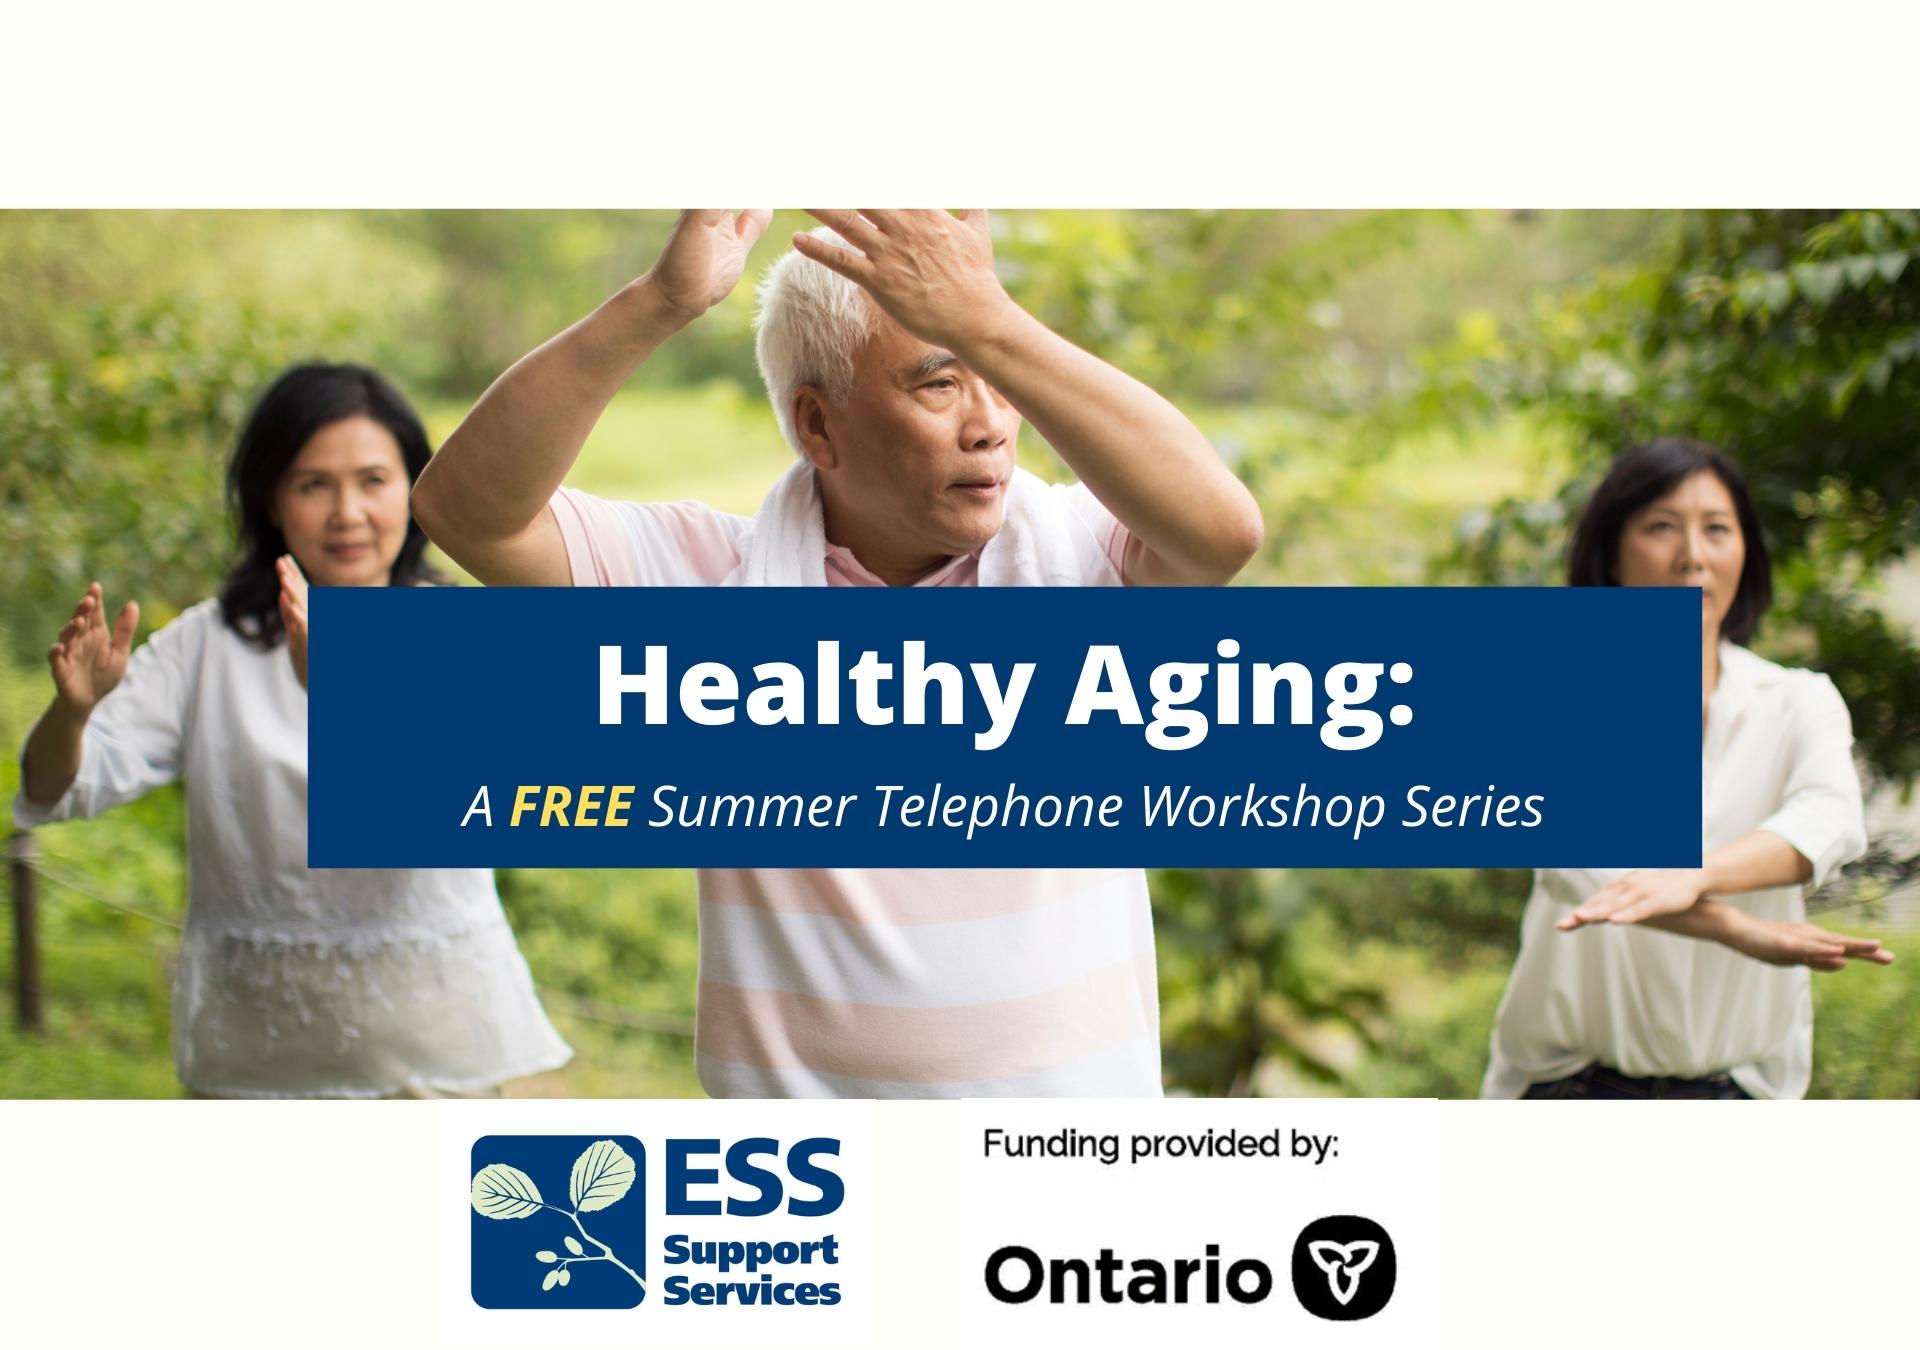 Free Healthy Aging Workshops for Older Adults